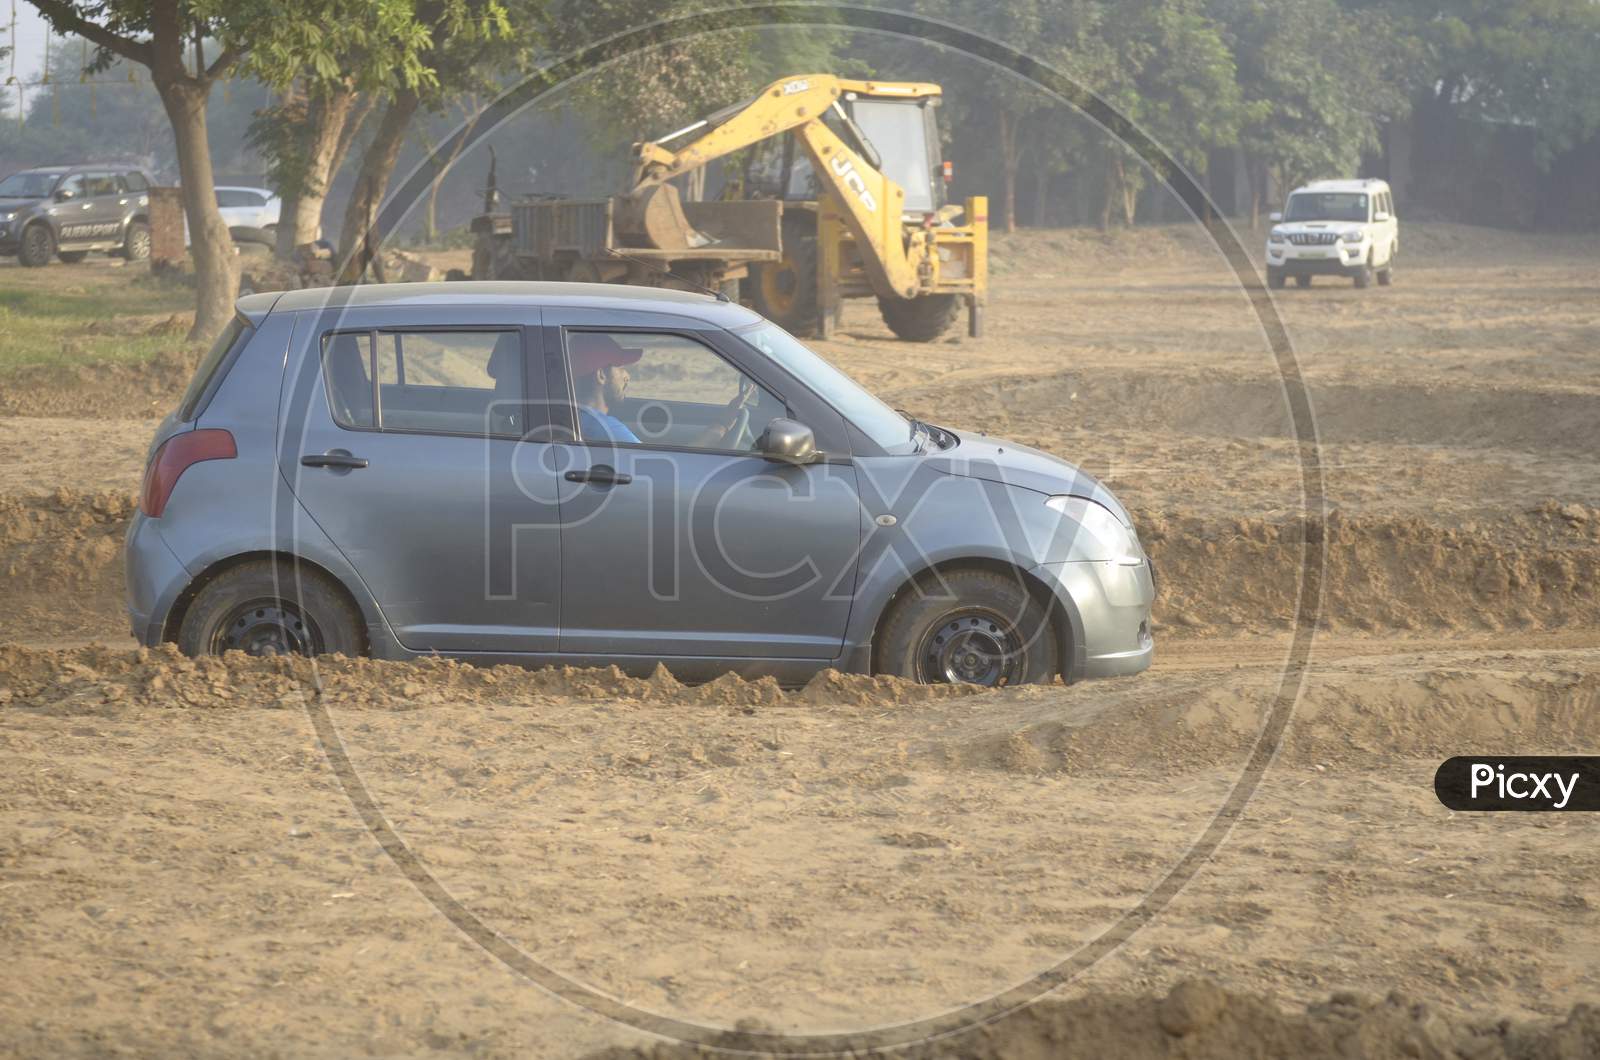 View of Maruti Suzuki Swift moving along the dirt road